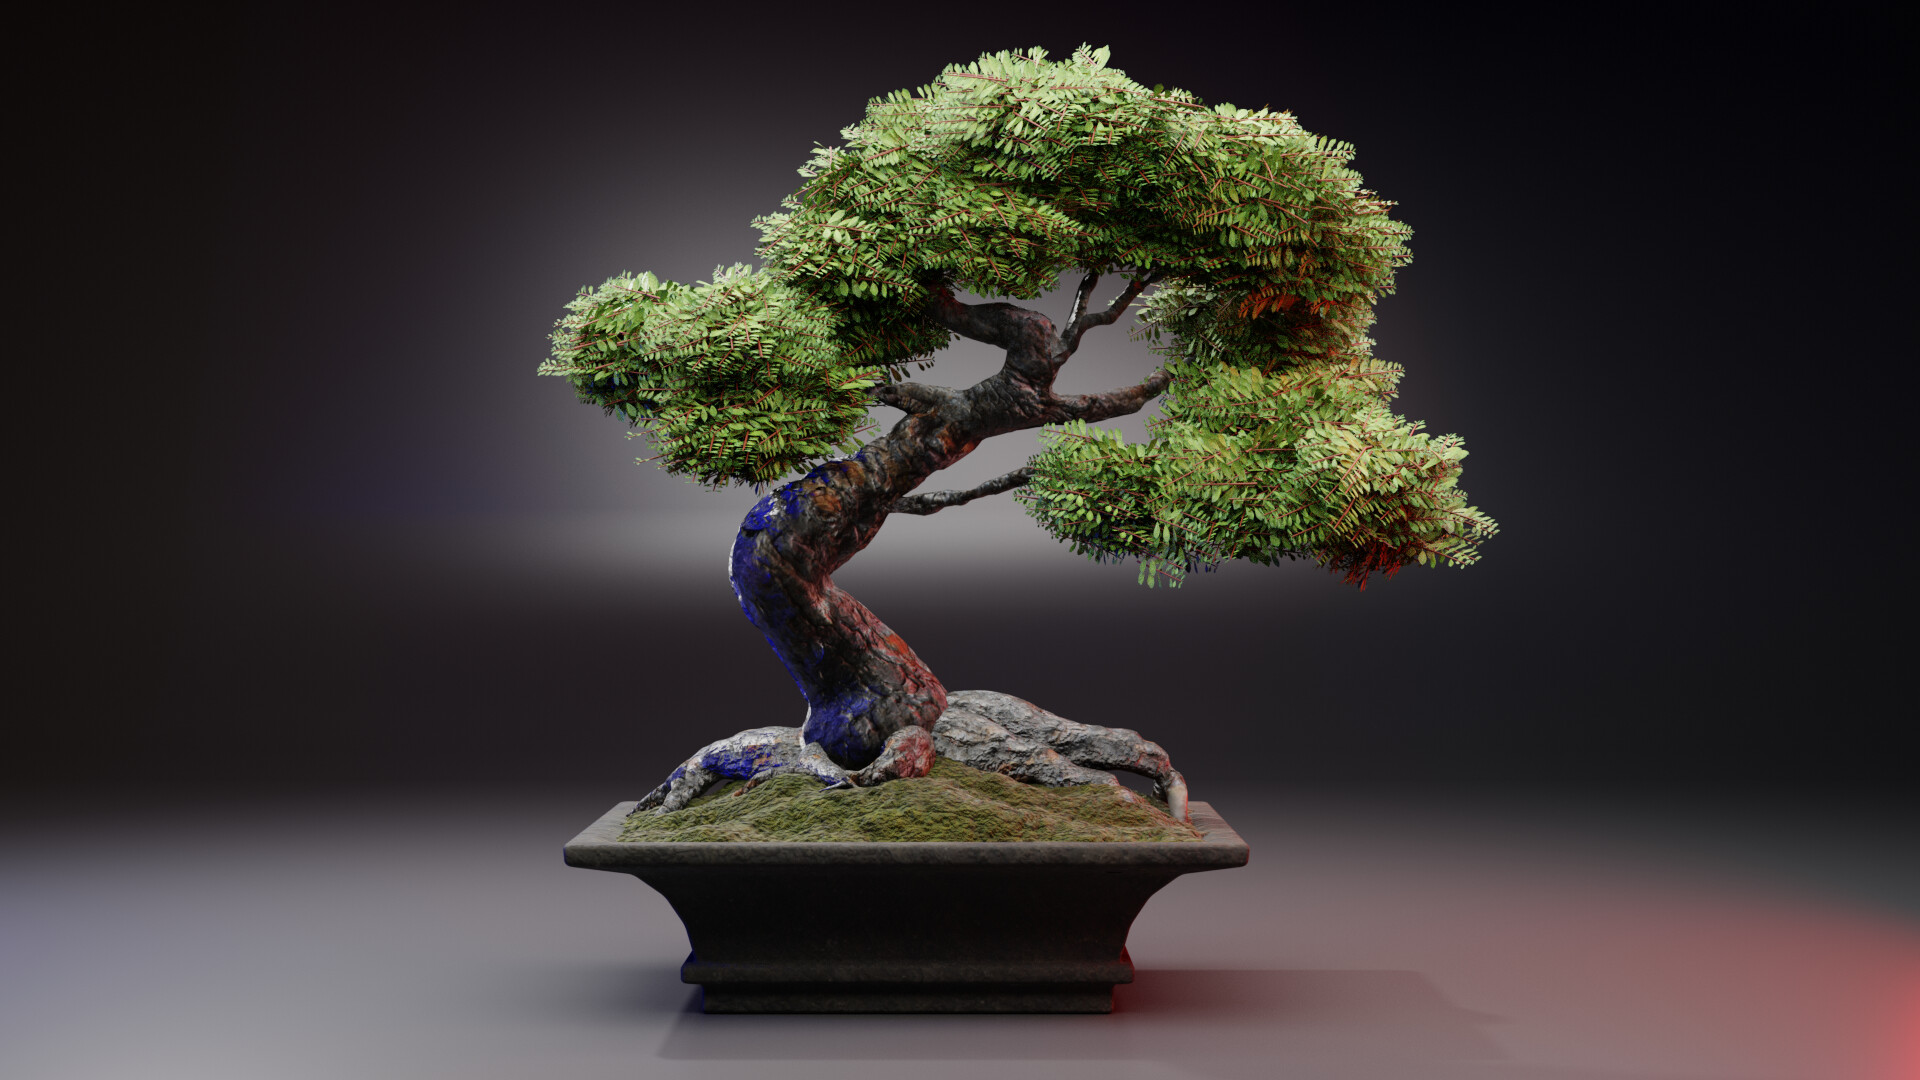 ArtStation - Bonsai tree